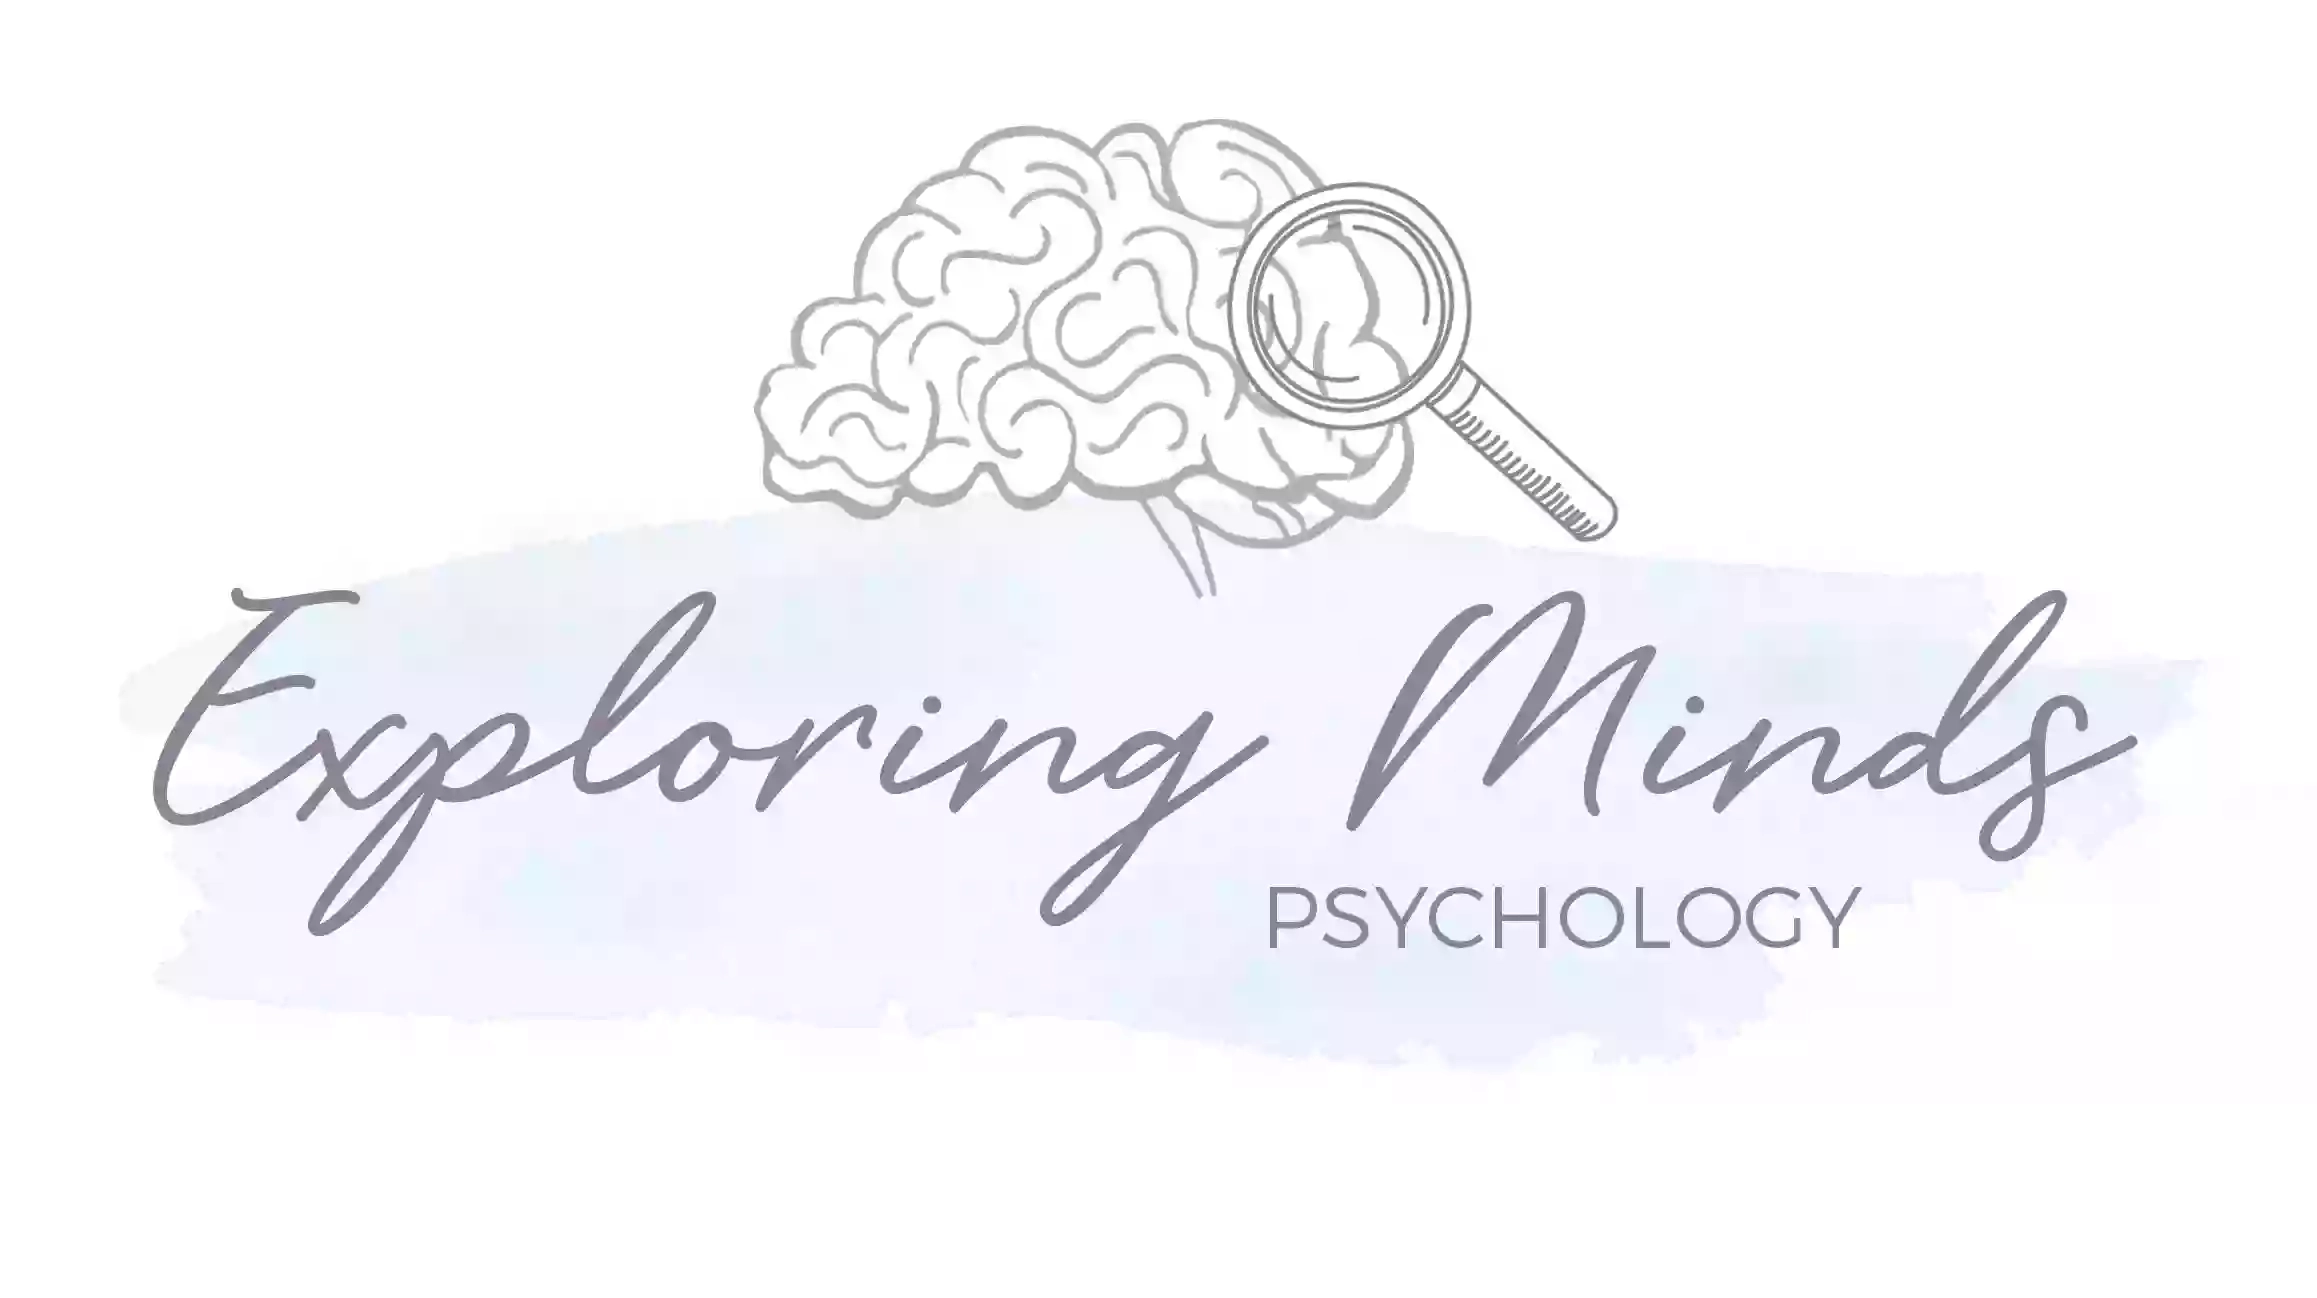 Exploring Minds Psychology Limited